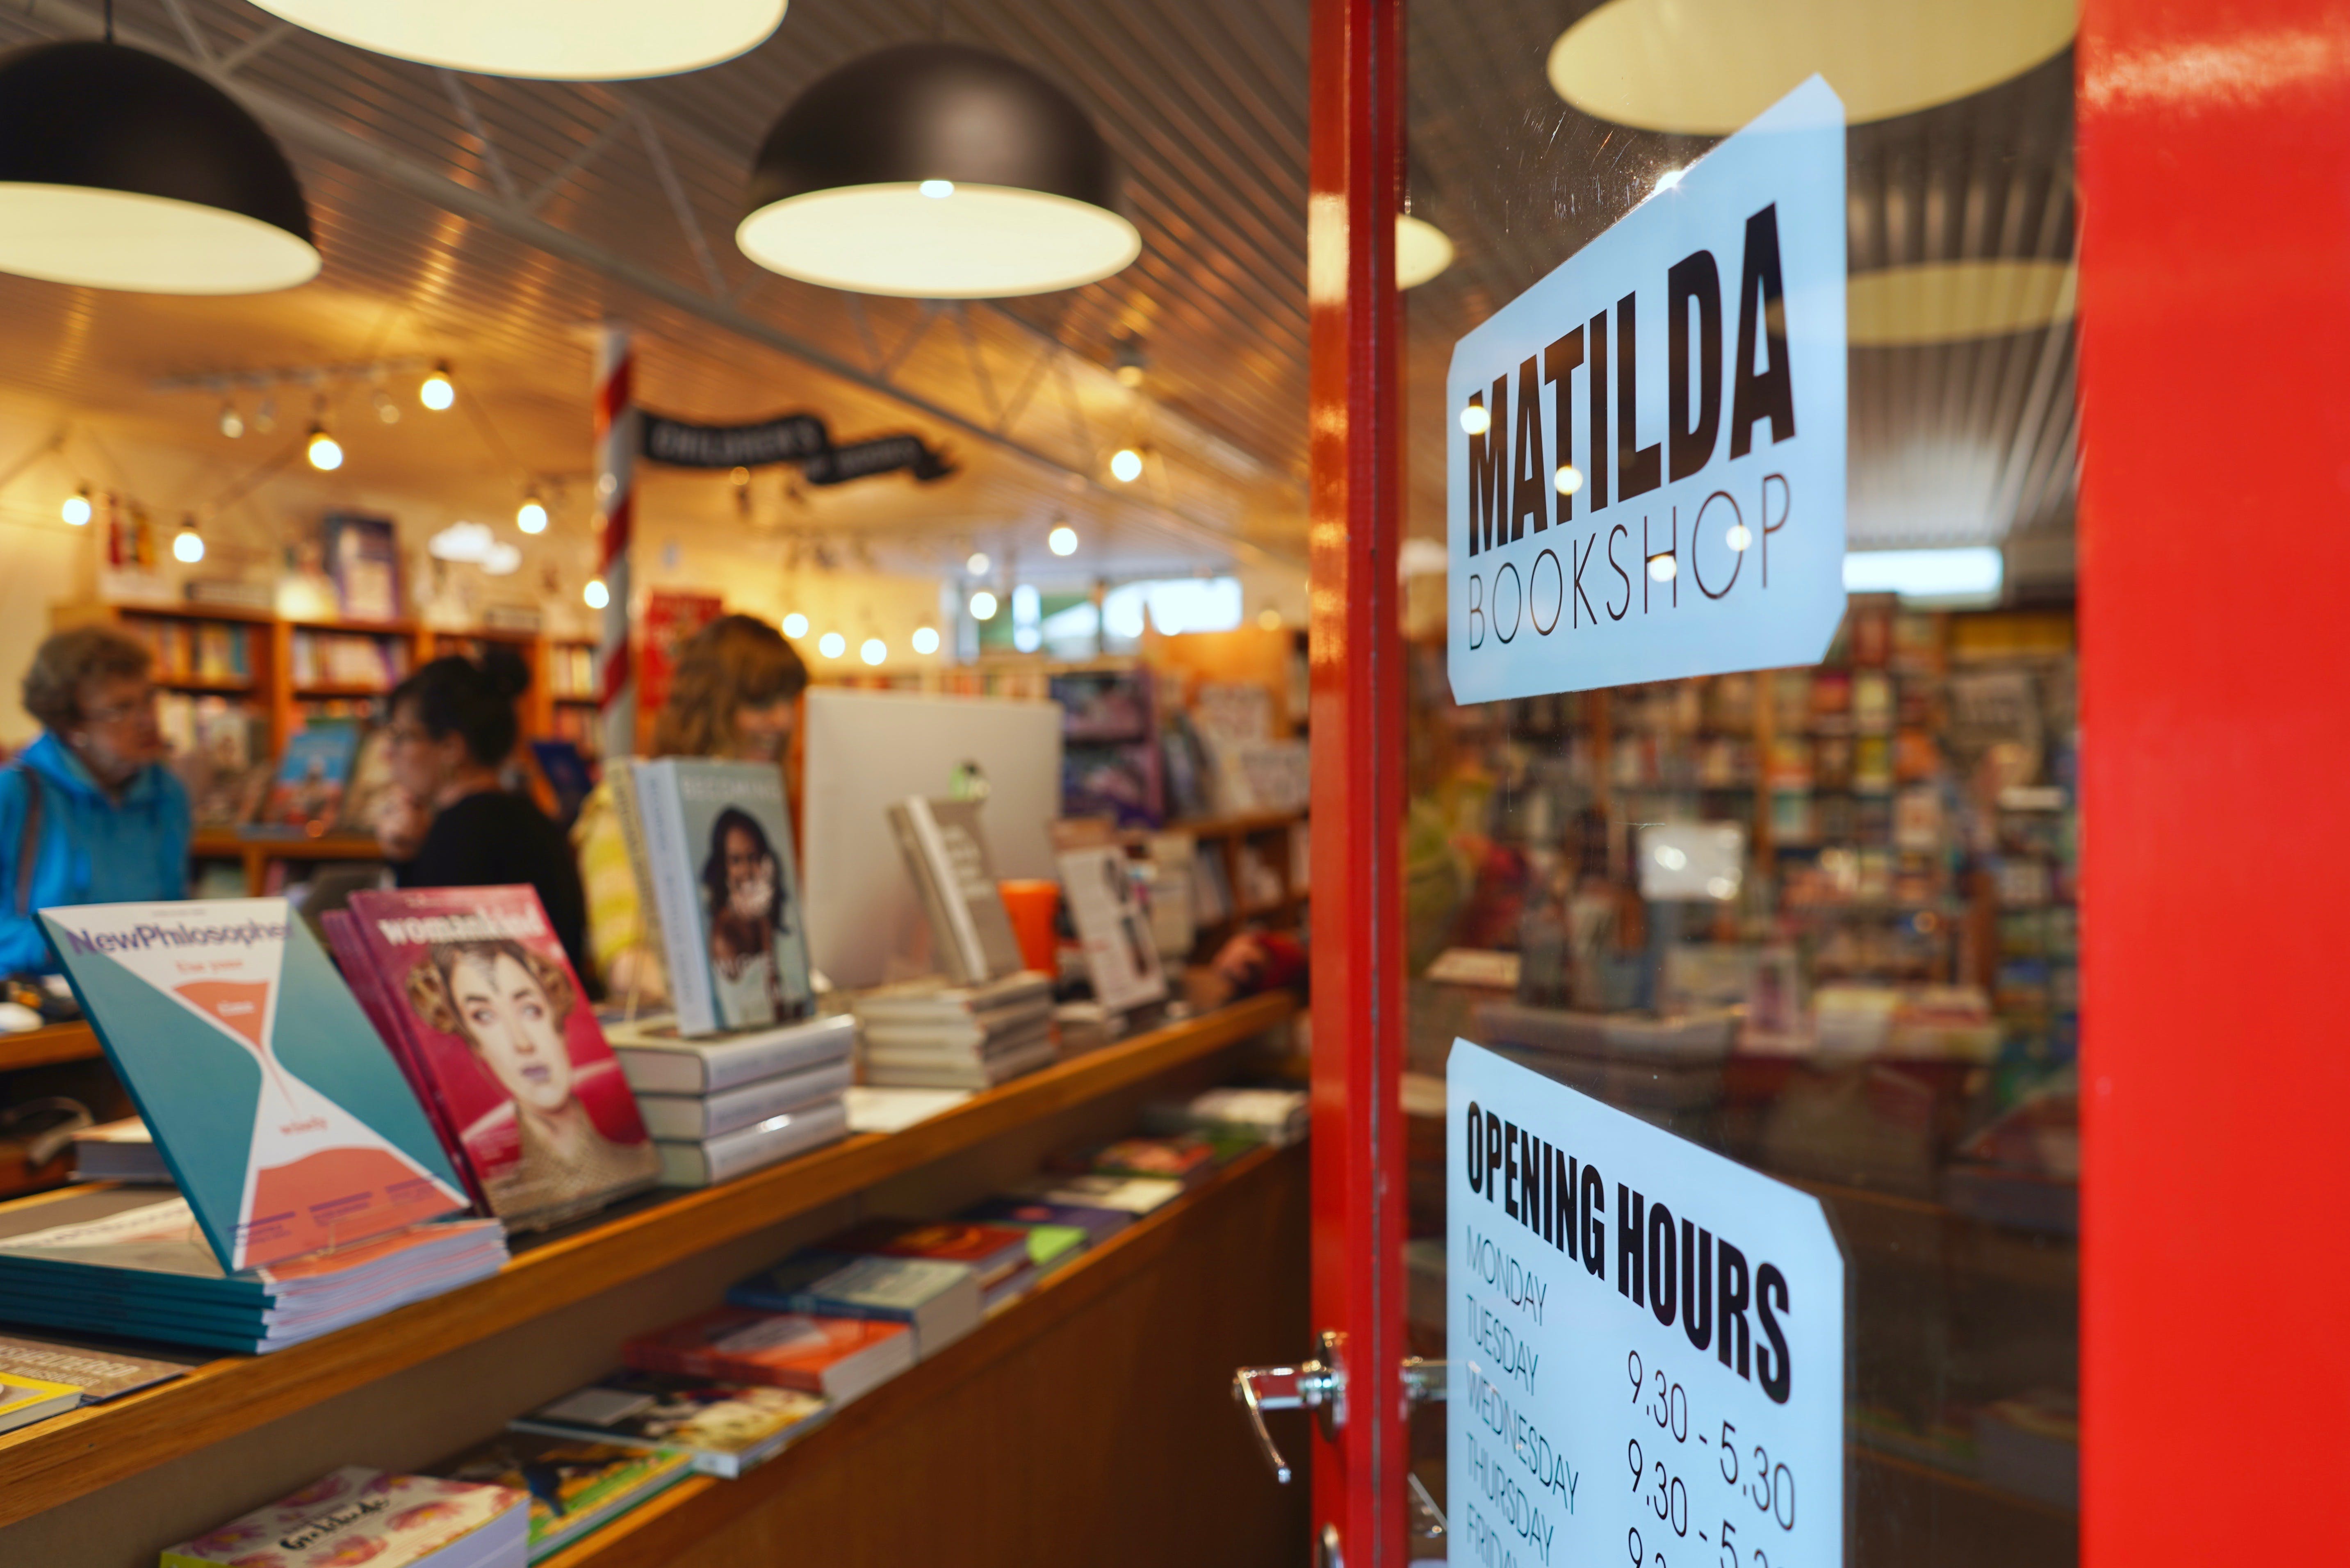 Matilda Bookshop - Attractions Melbourne